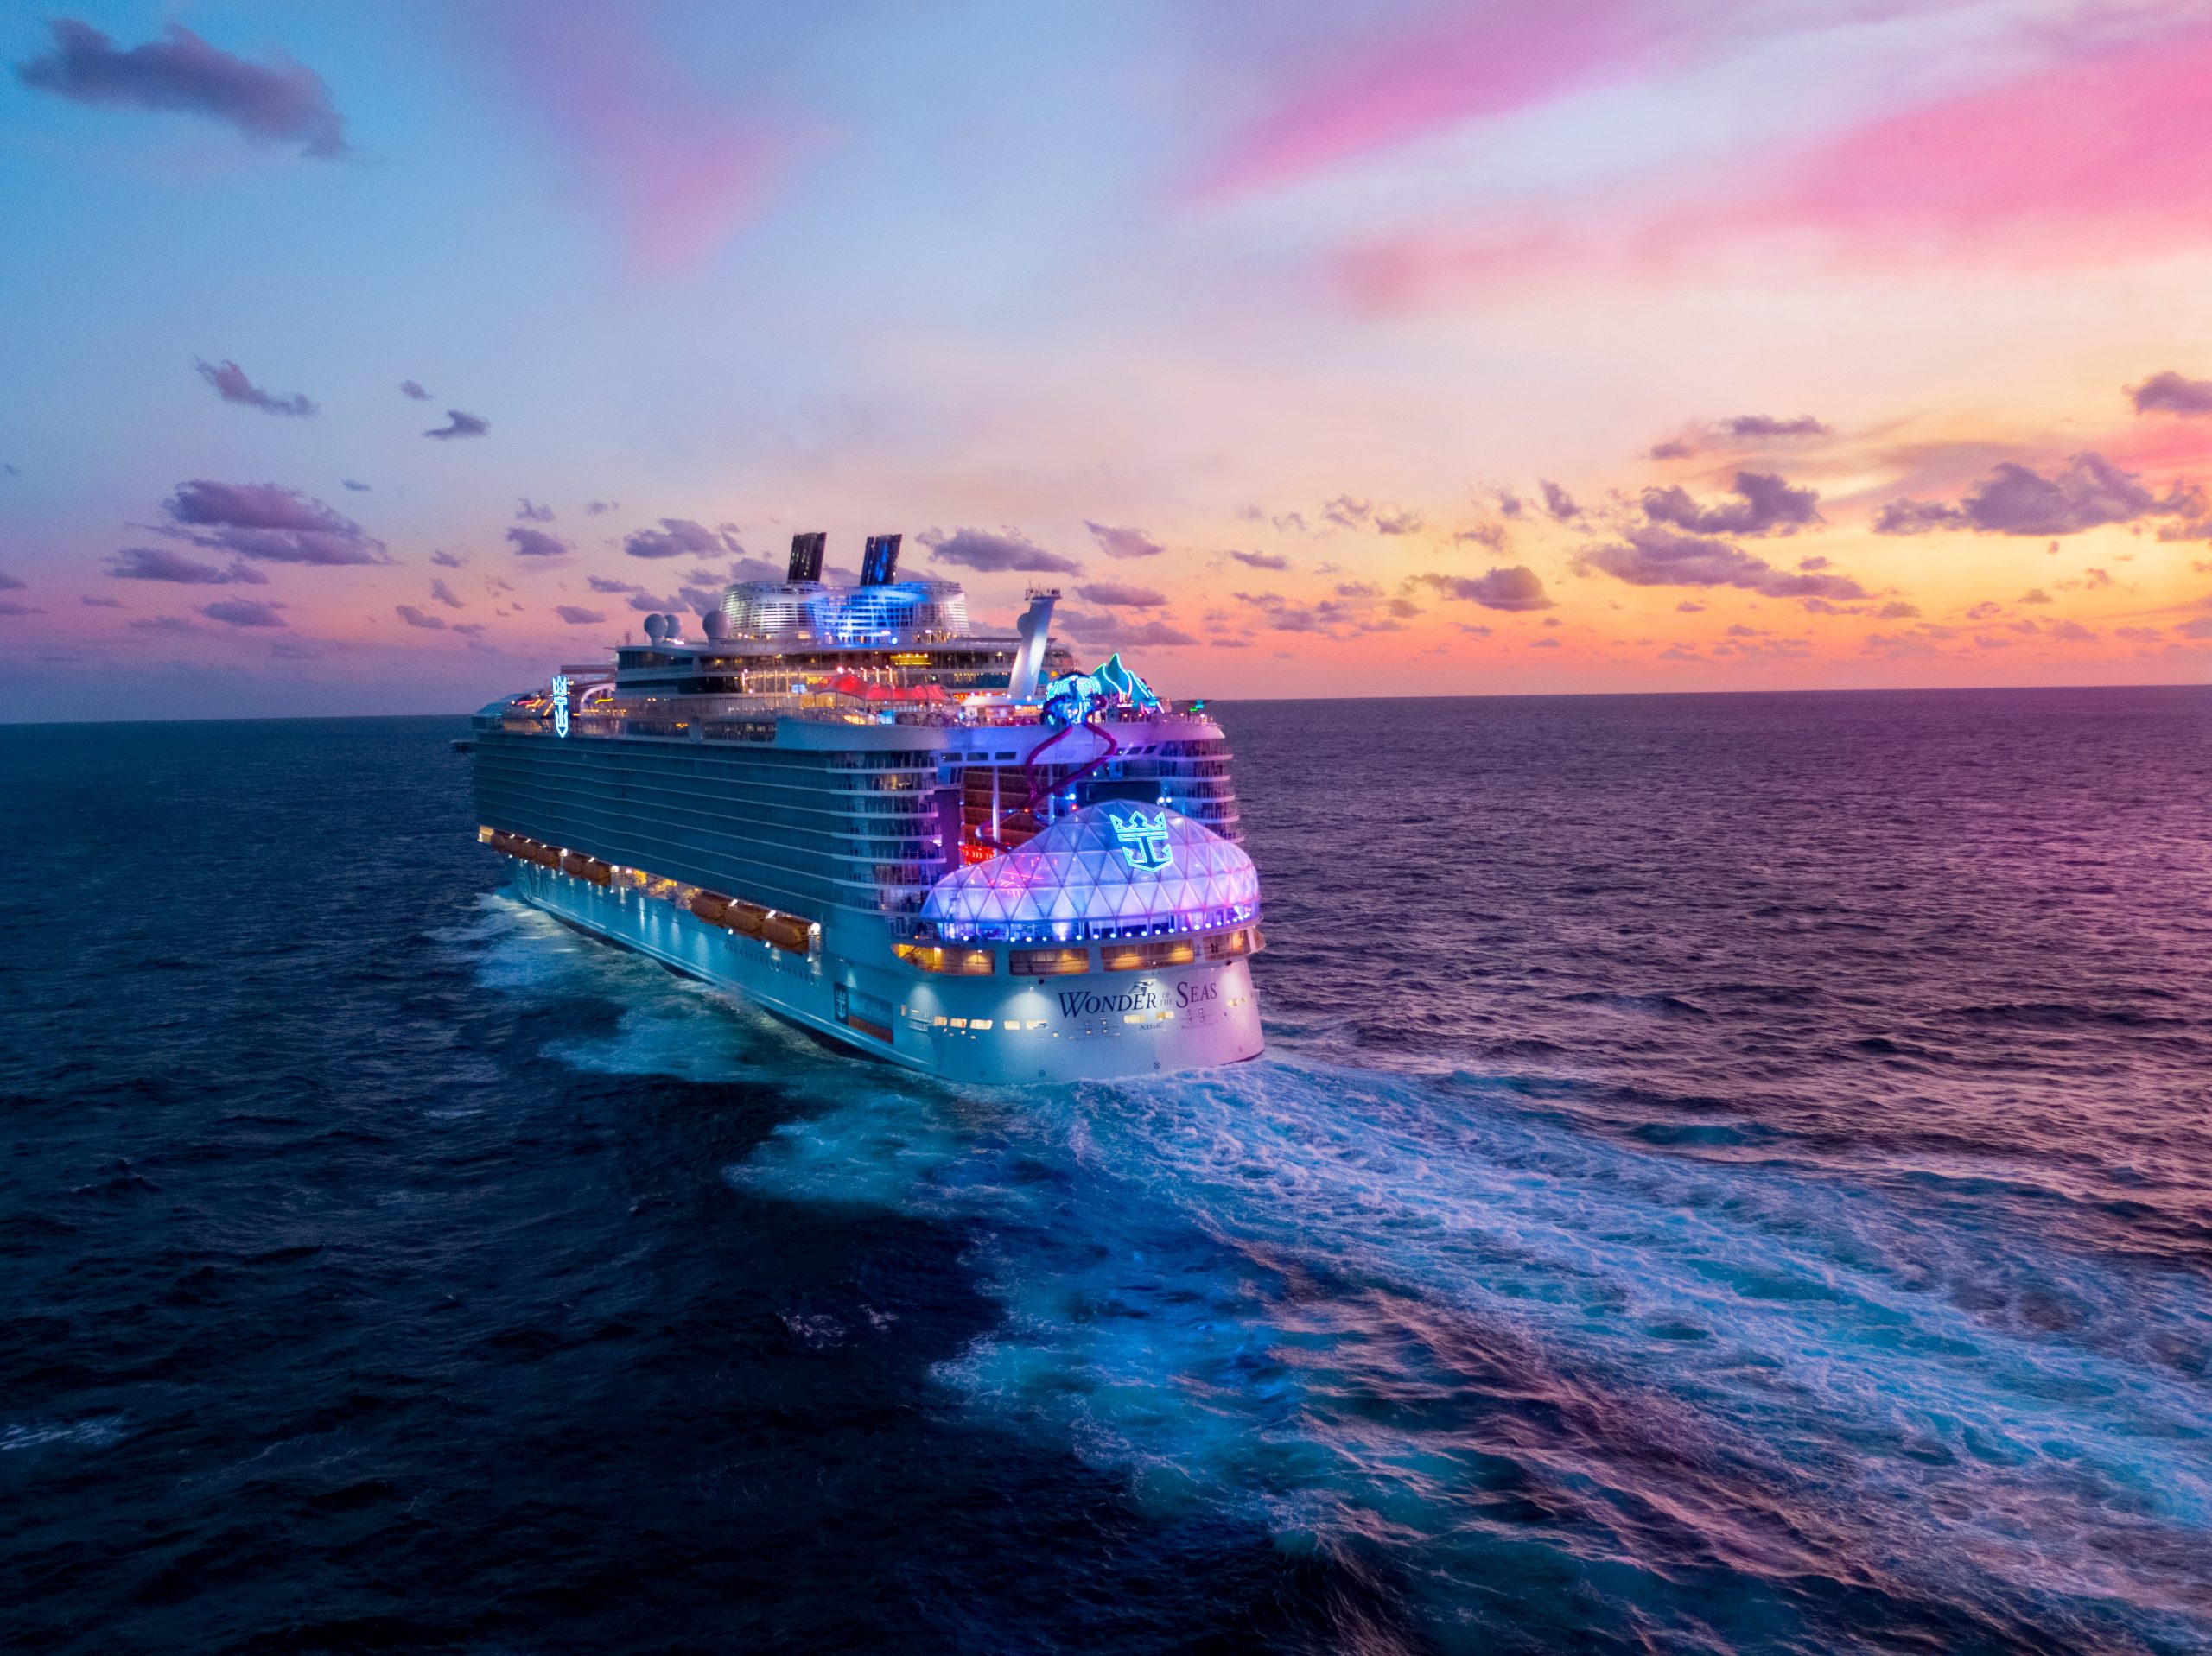 Cruise Ships – Introducing Royal Caribbean’s Oasis Class Cruise Ships